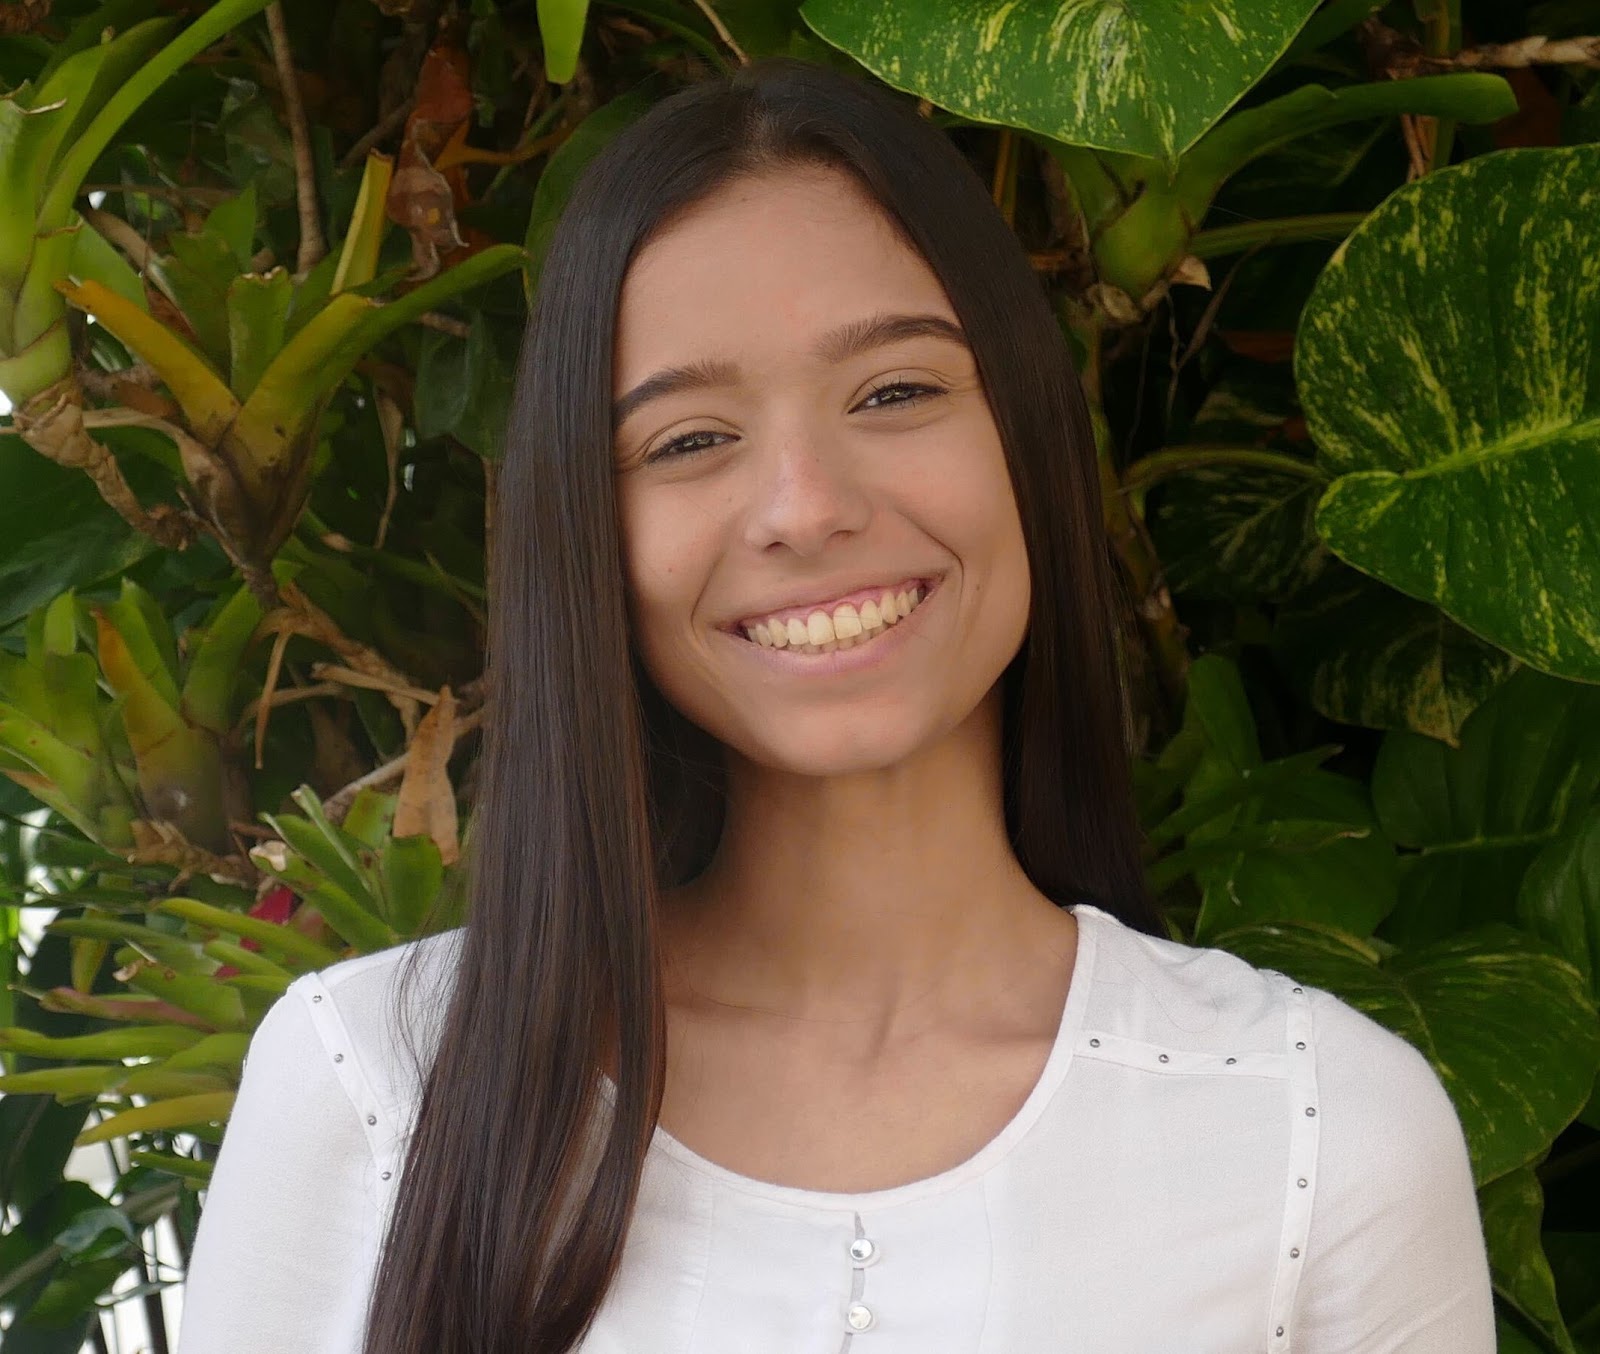 Mission driven marketing: Team member Maria Andreina Perez